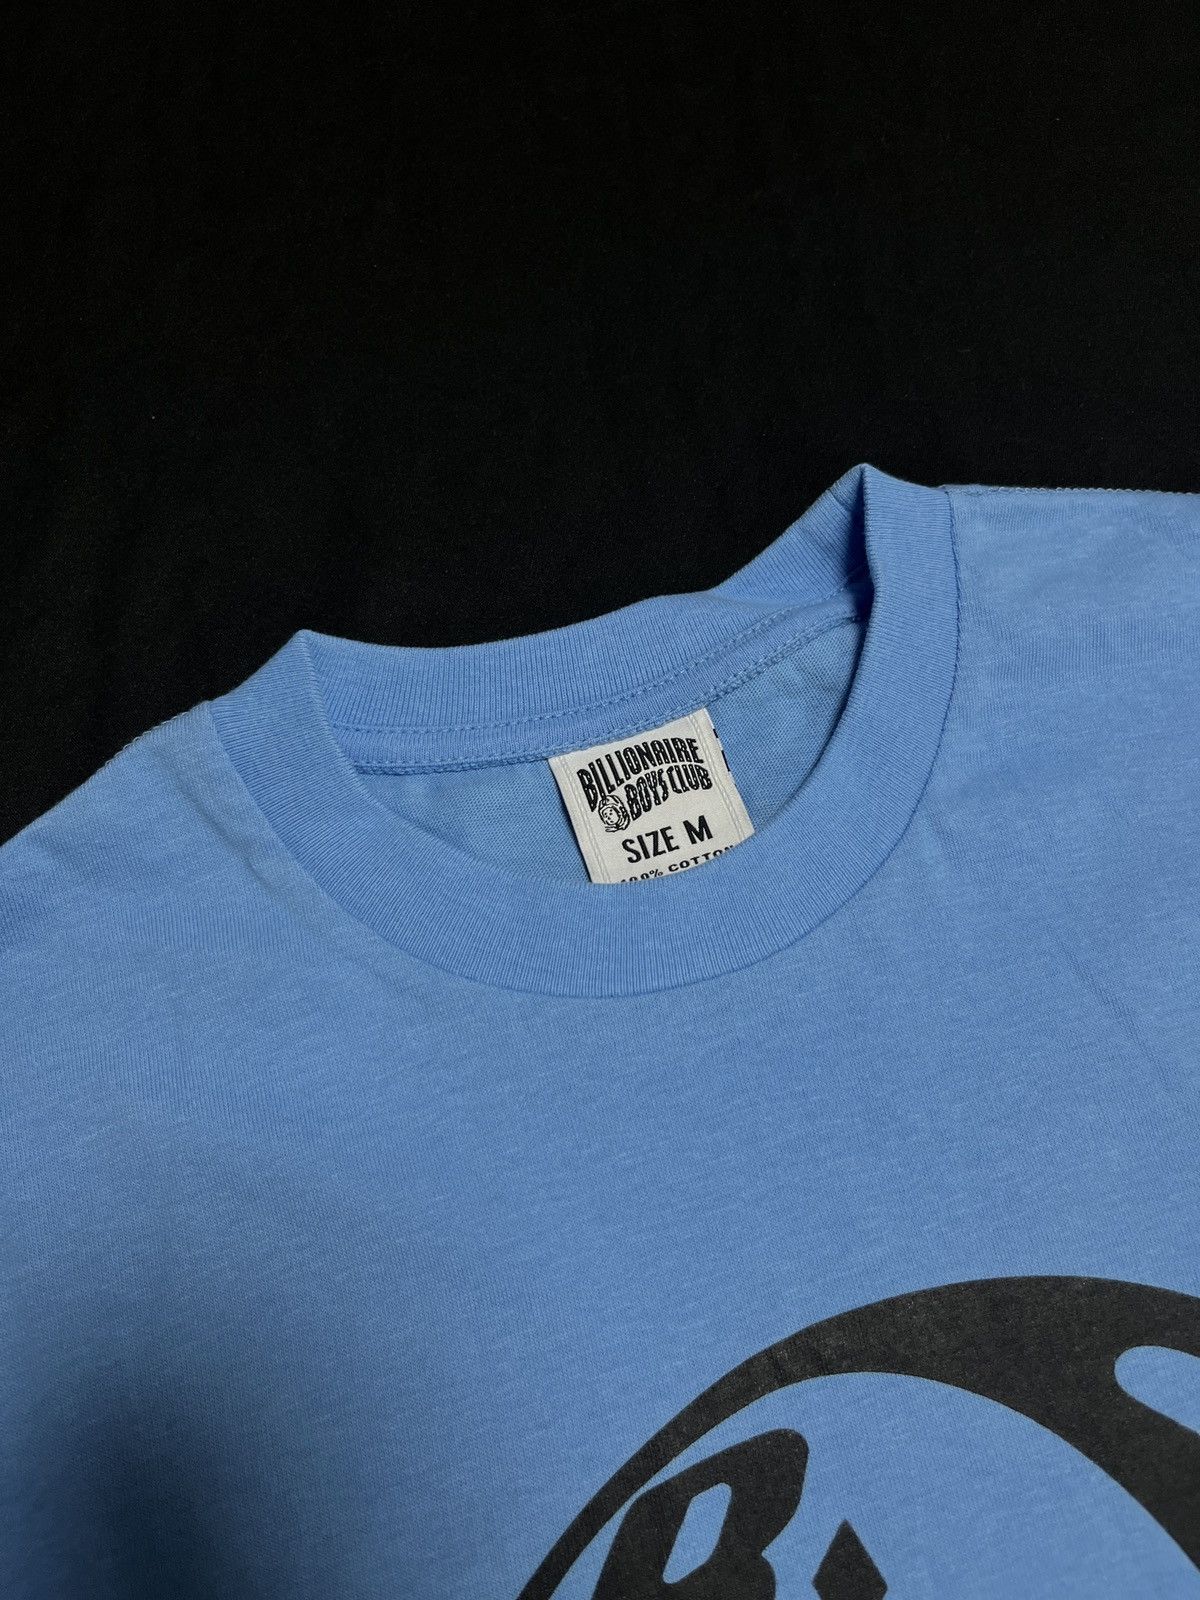 Rare Billionaire Boys Club BBC Helmet Print T-Shirt Blue Medium - 2